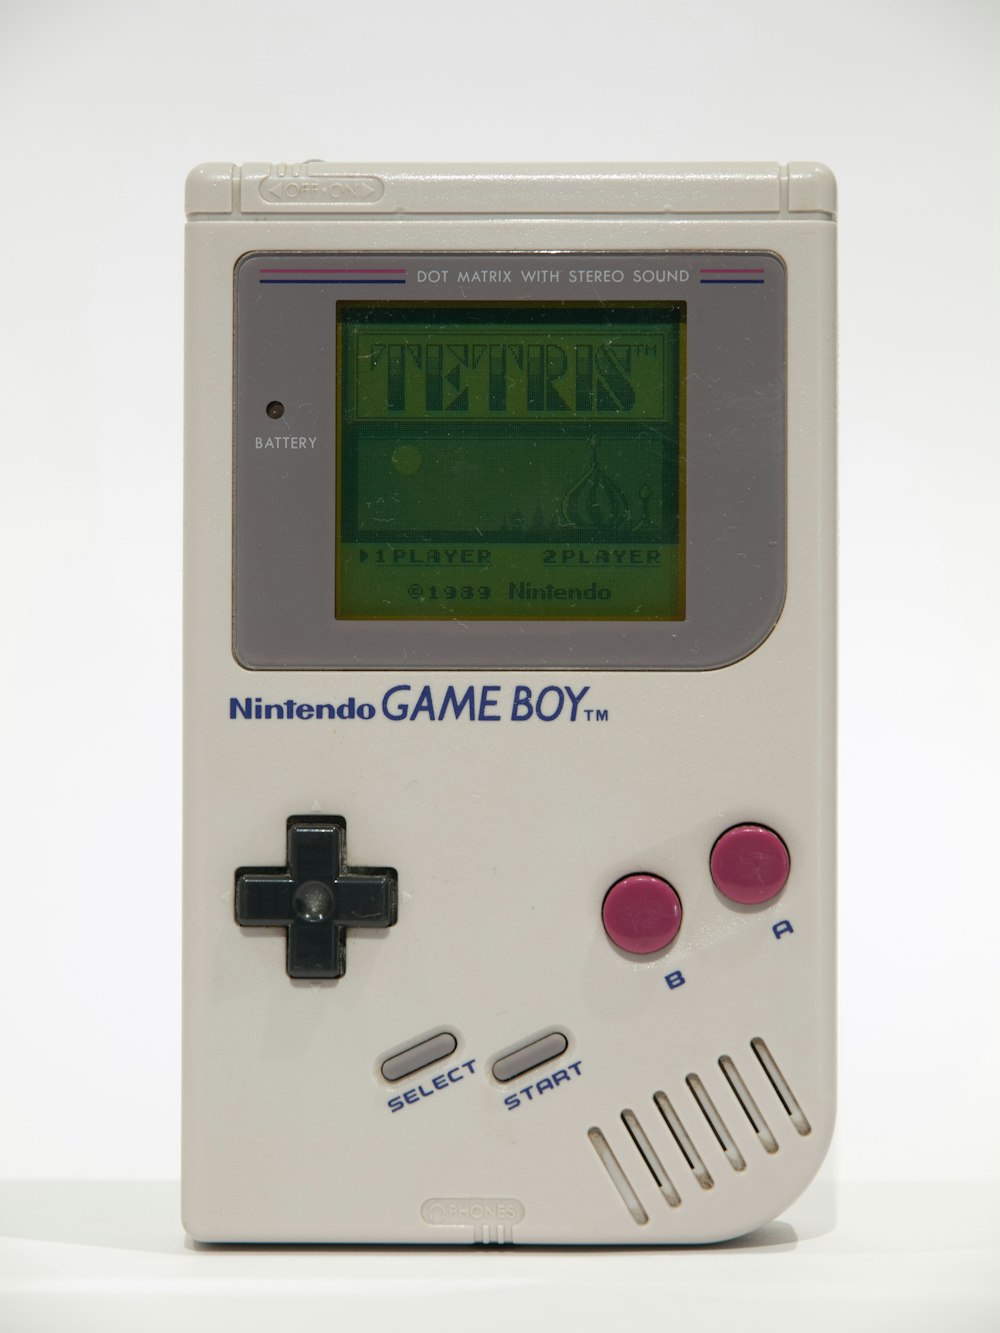 Un vecchio Nintendo Game Boy con un Gameboy su di esso